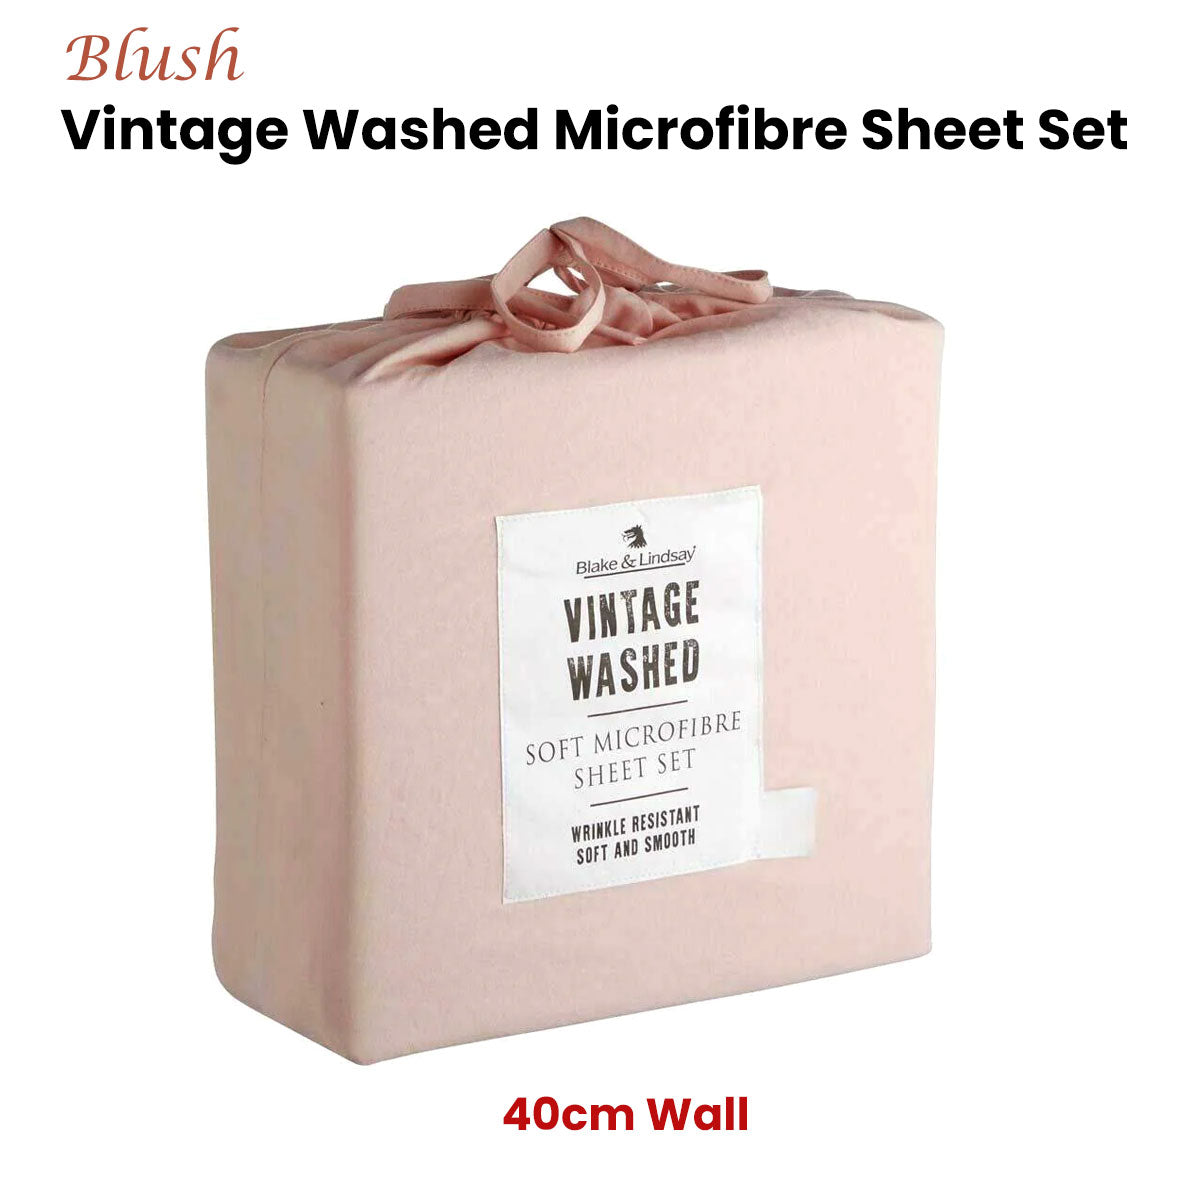 Blake & Lindsay Blush Vintage Washed Microfibre Sheet Set 40cm Wall Double